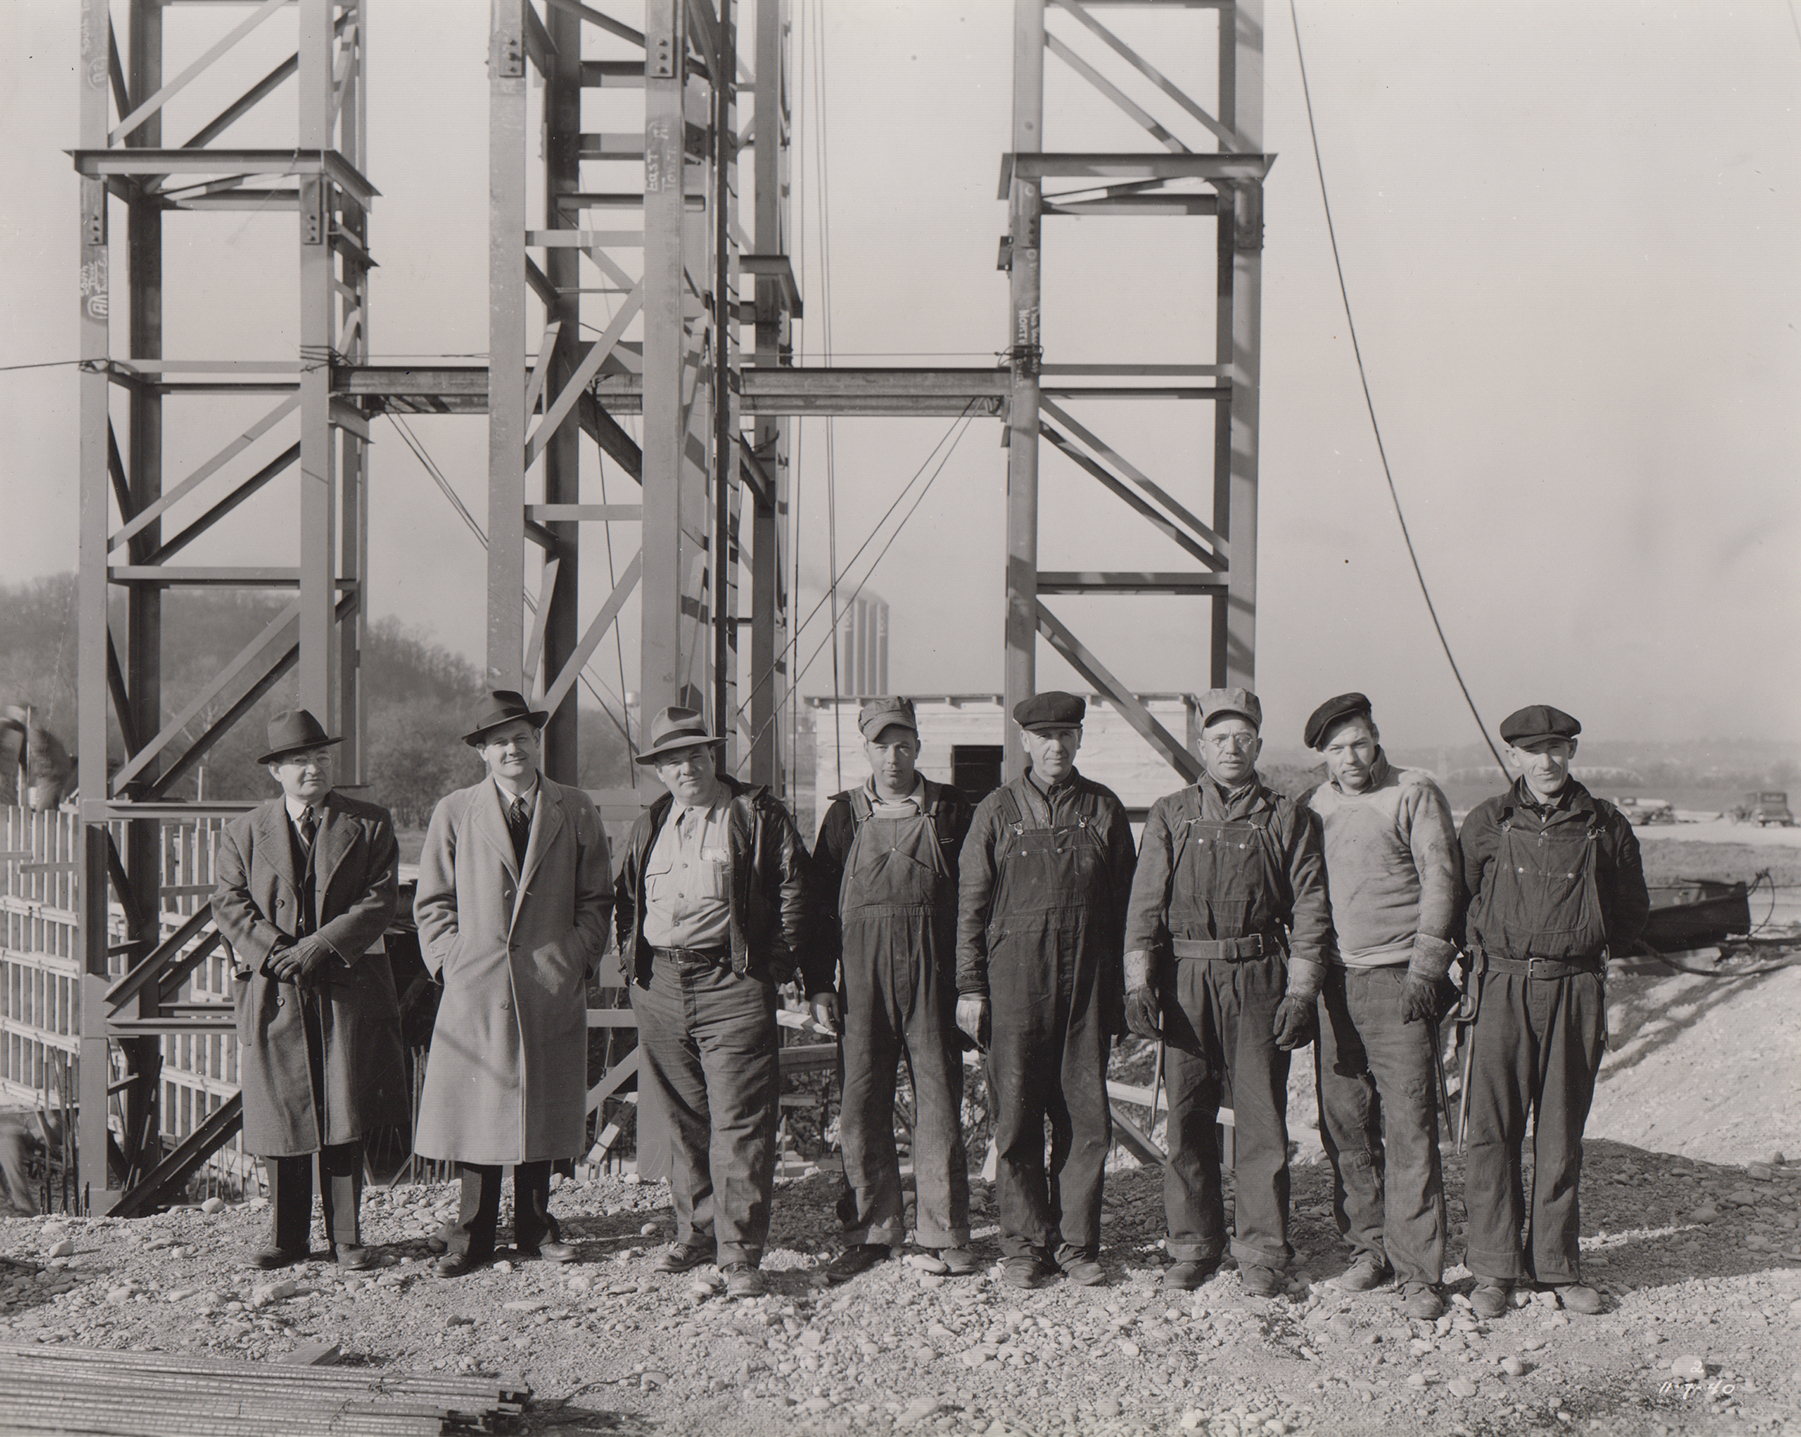 Deeds Carillon workers, 1940s